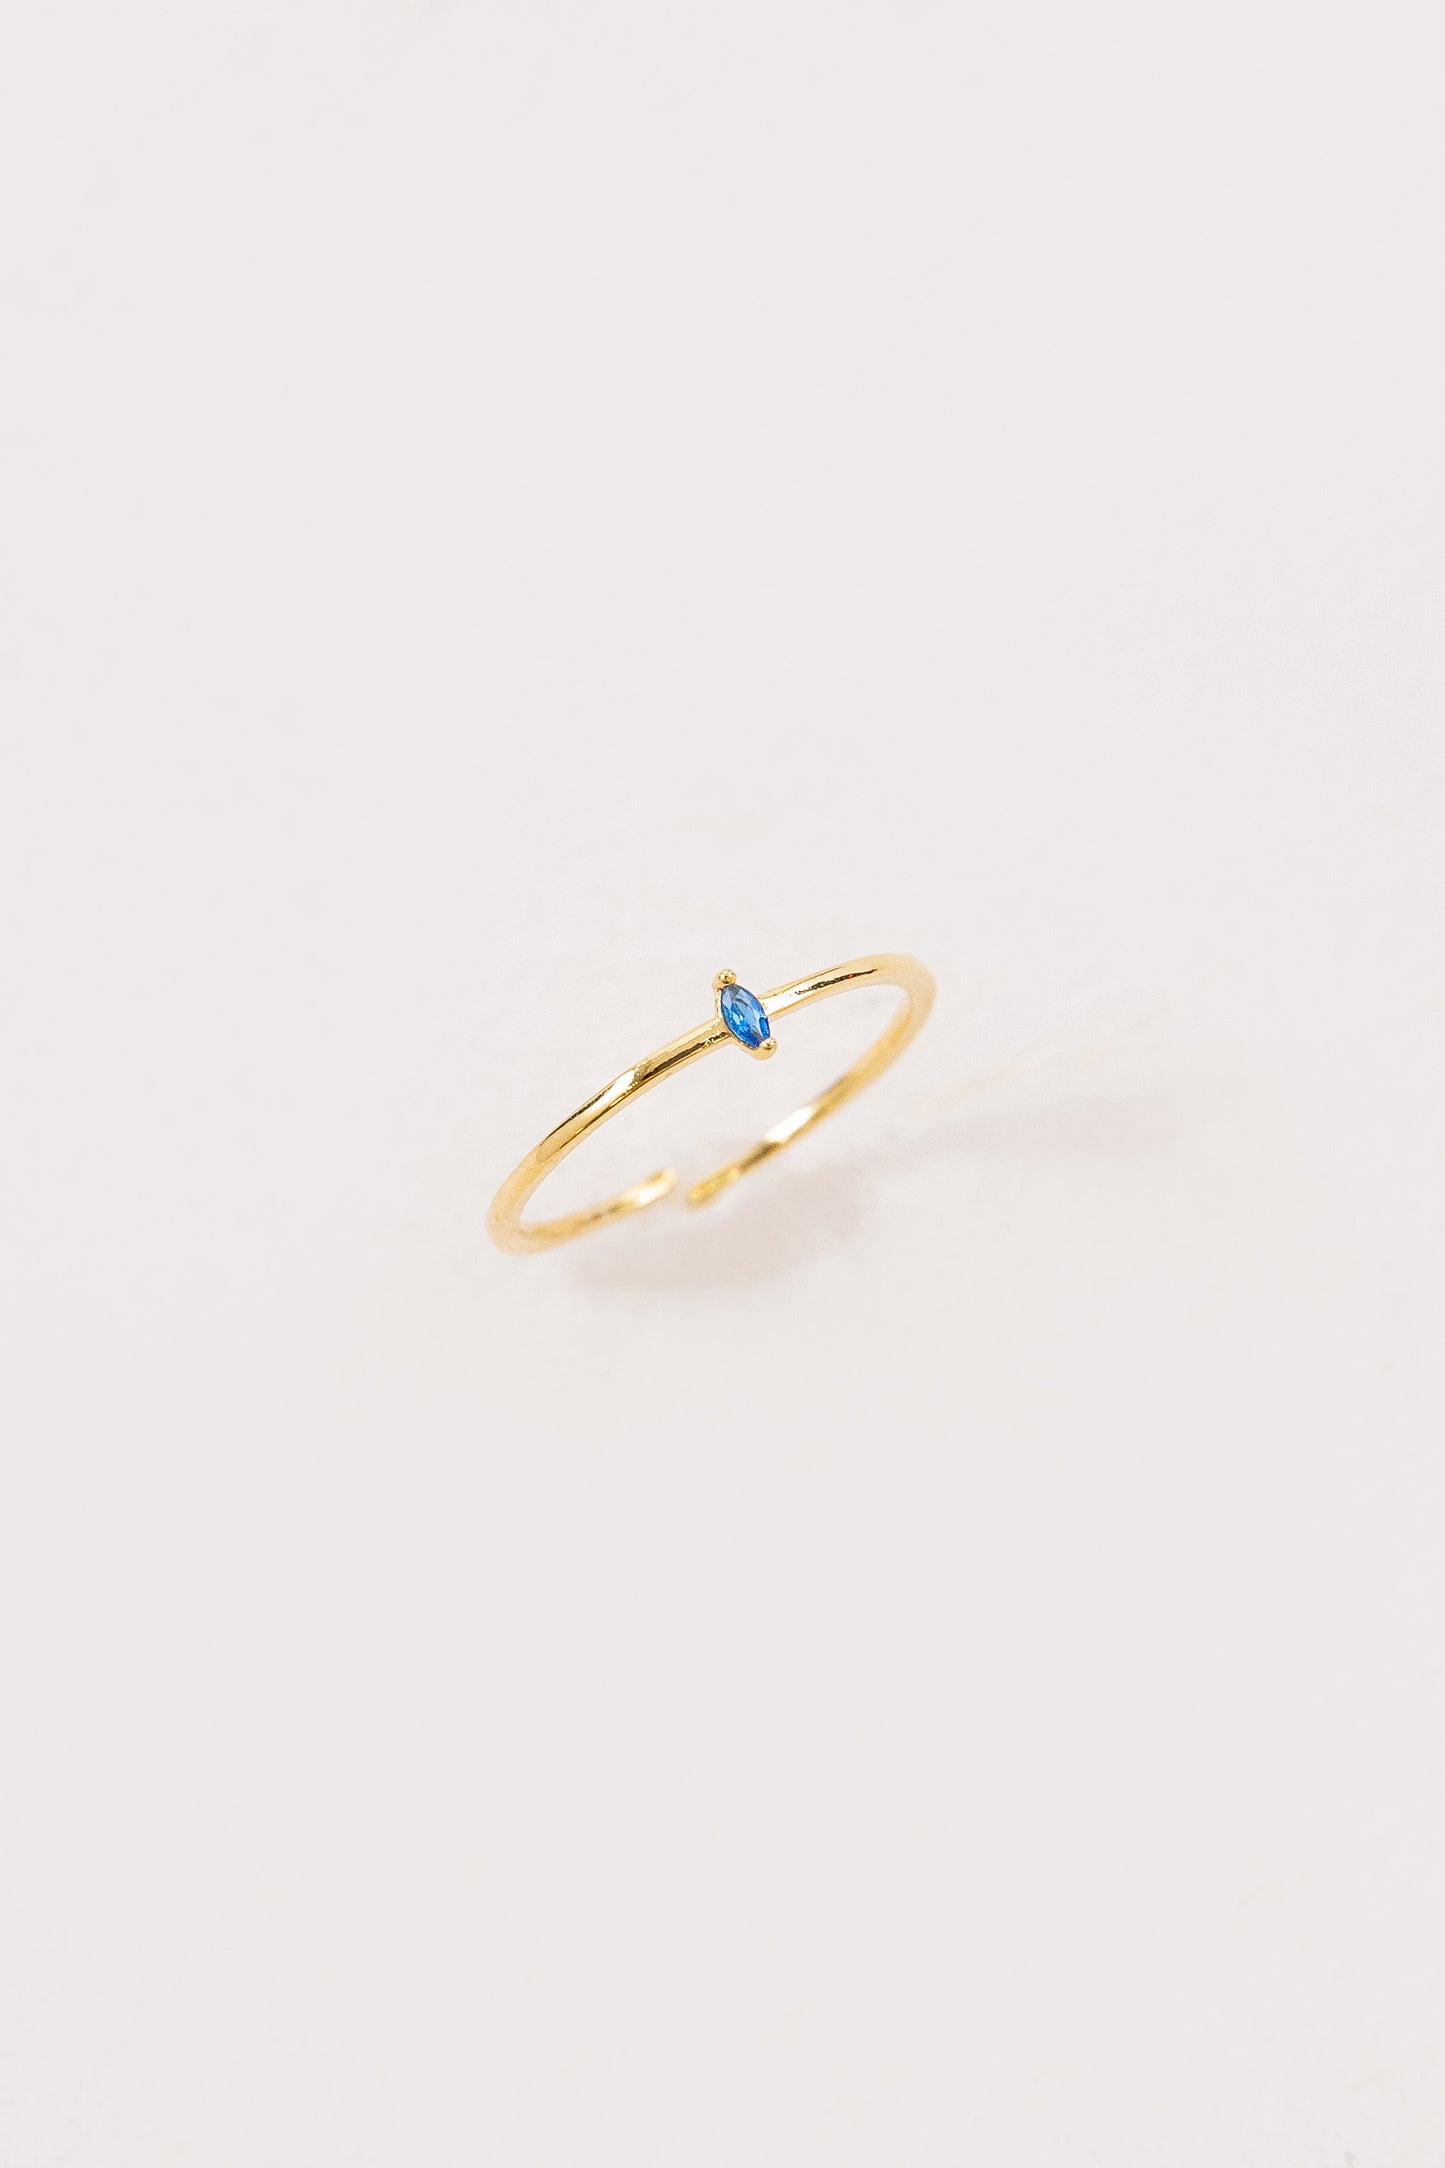 Solitary Simplicity Gem Stone Ring